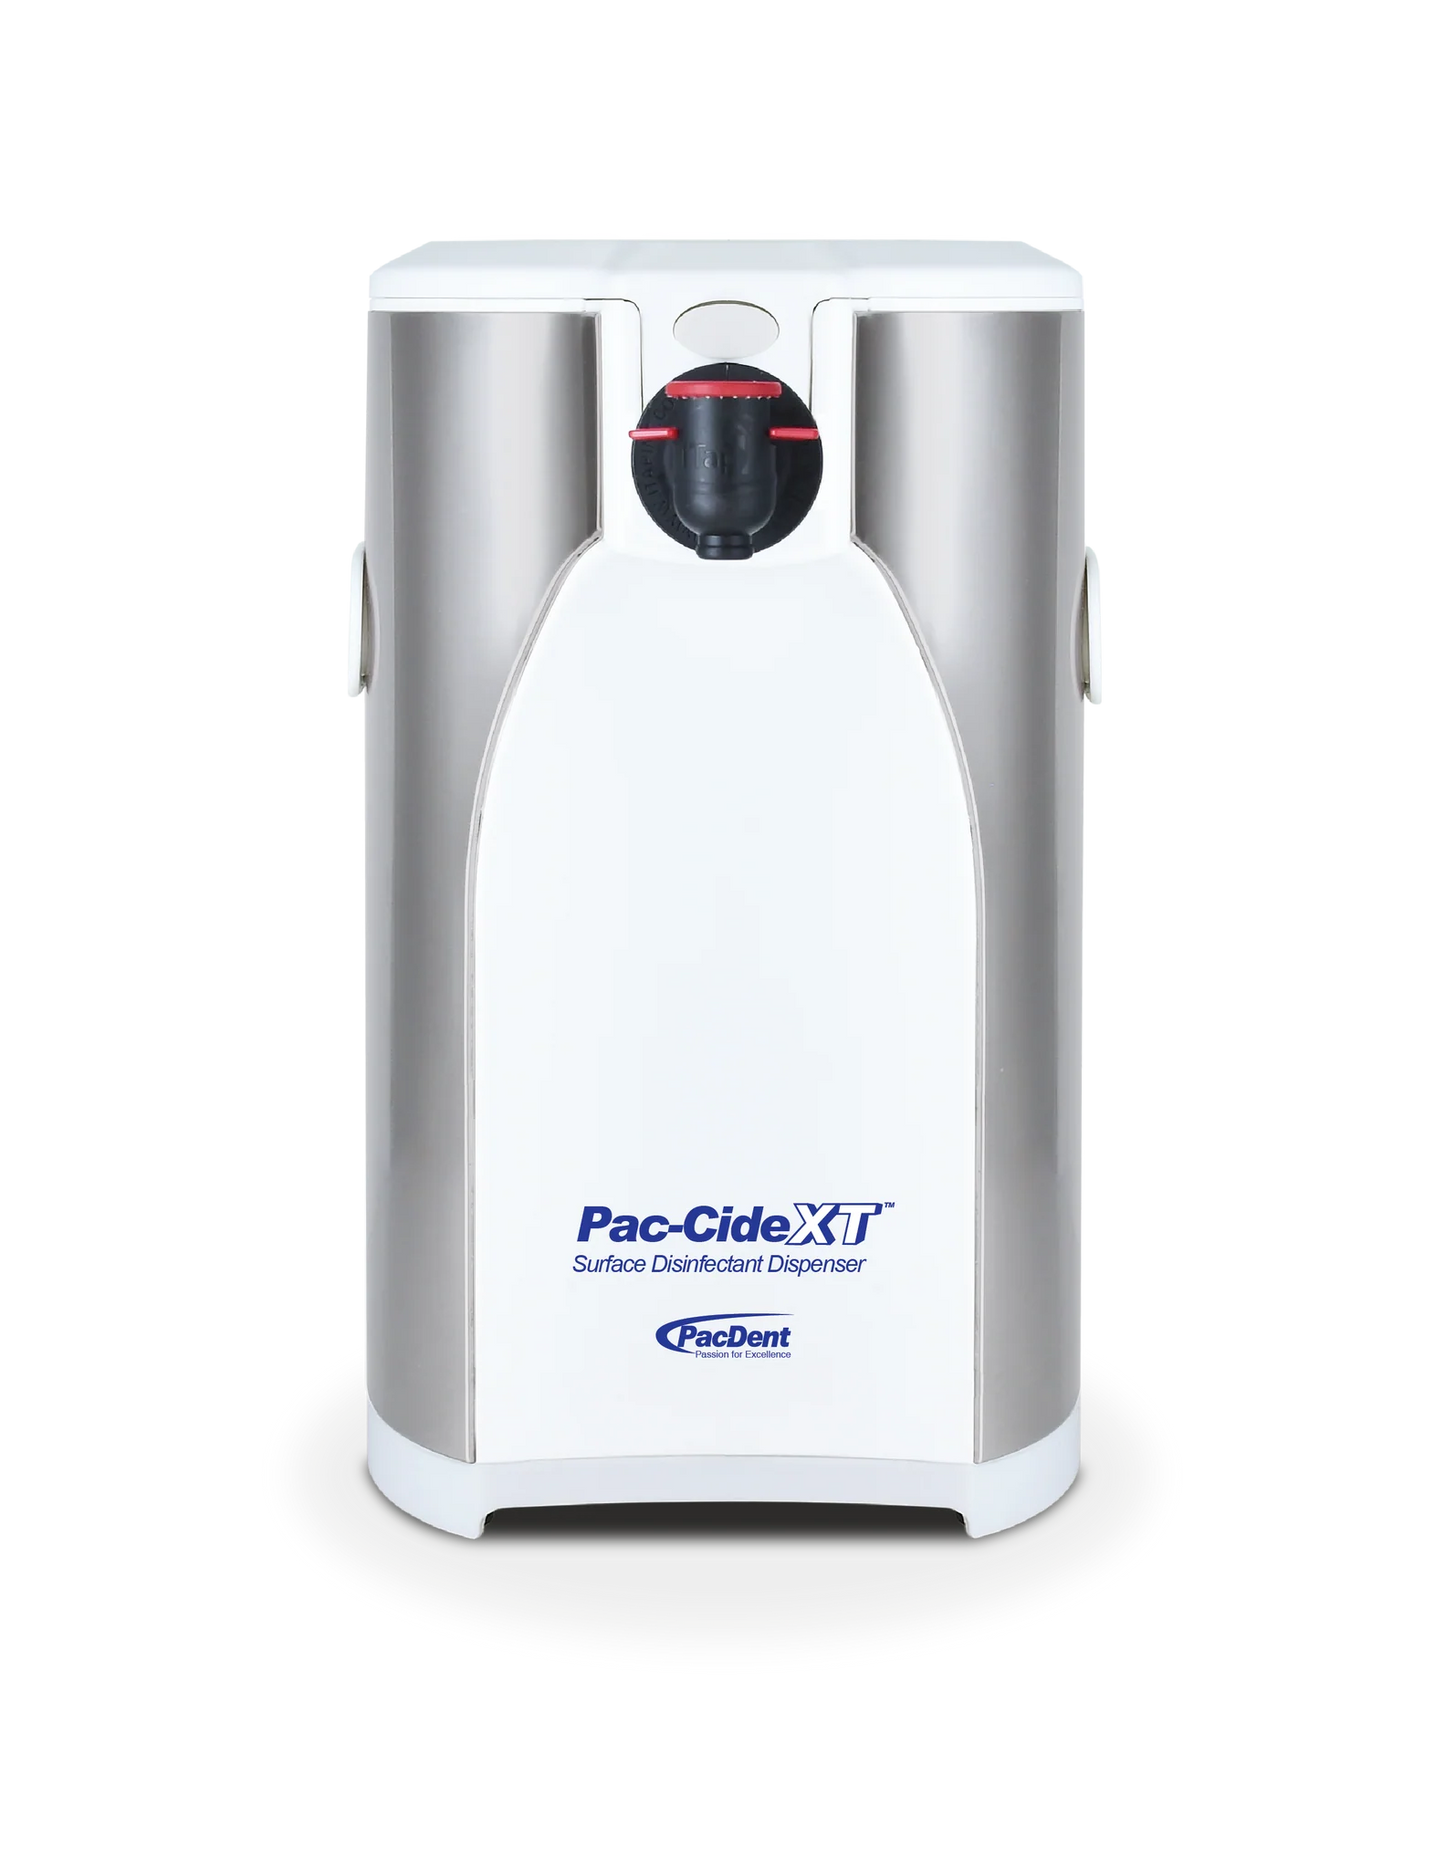 Pac-Dent Pac-Cide XT Stainless Steel Dispenser, 101.44 fl. oz. (3 L)